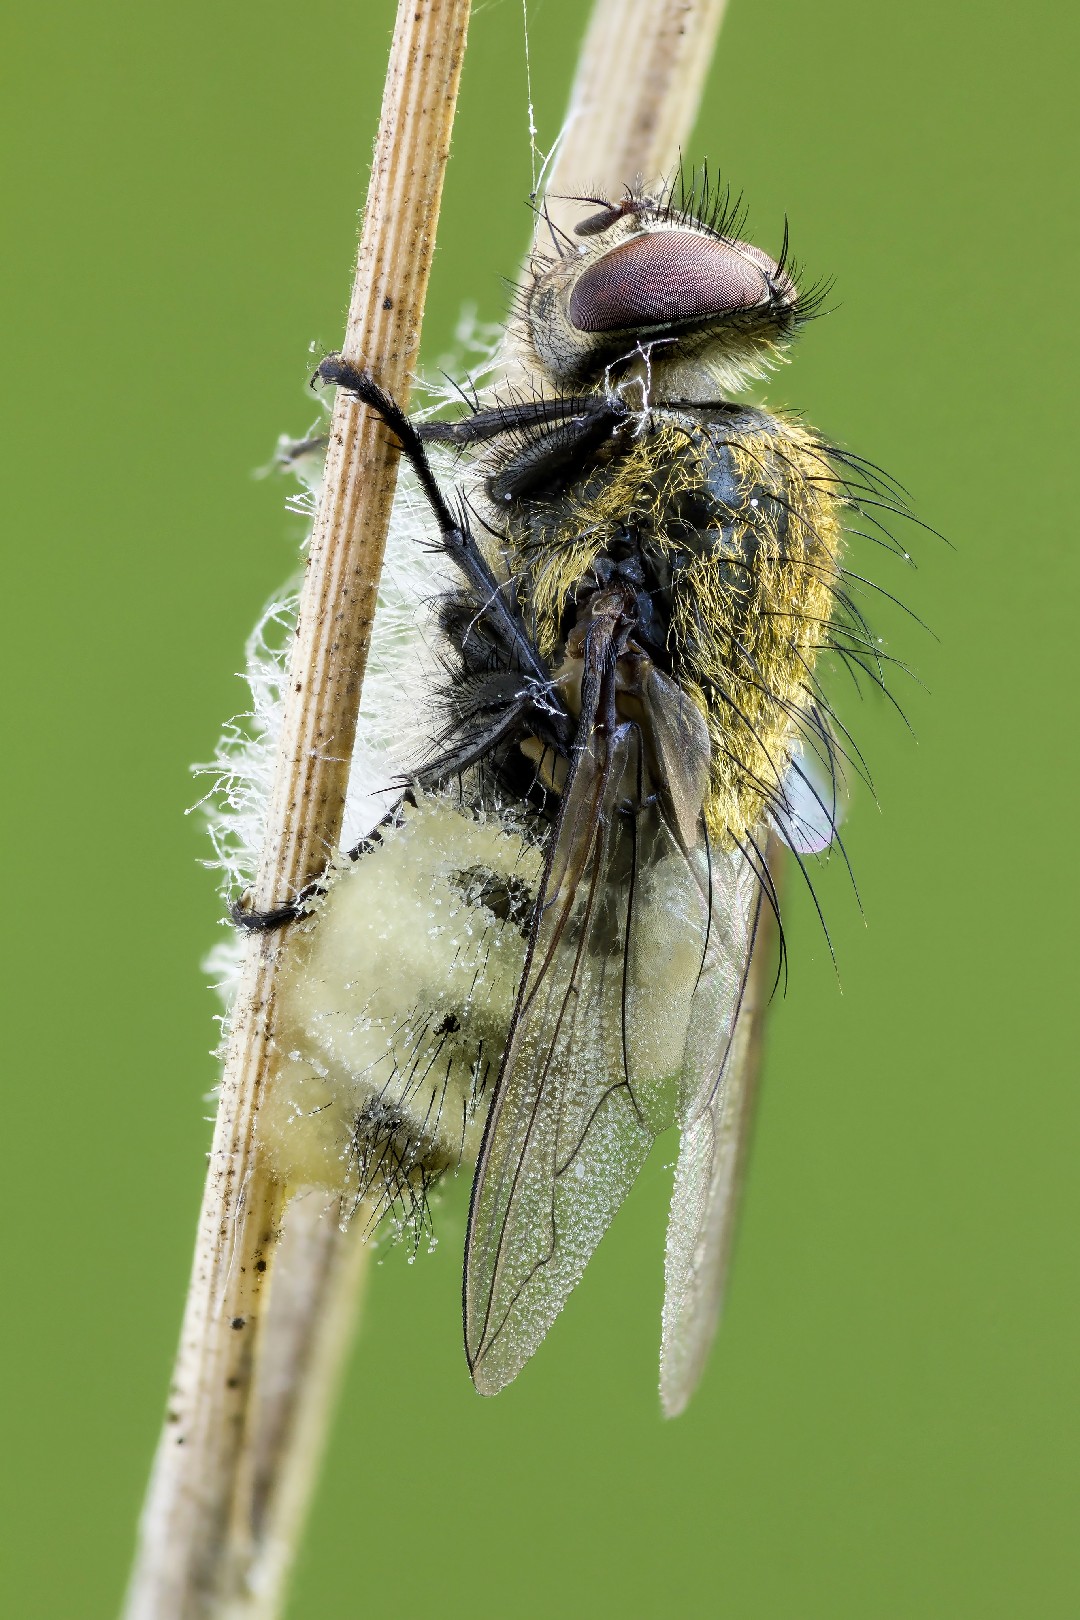 Fly death fungus (Entomophthora muscae)